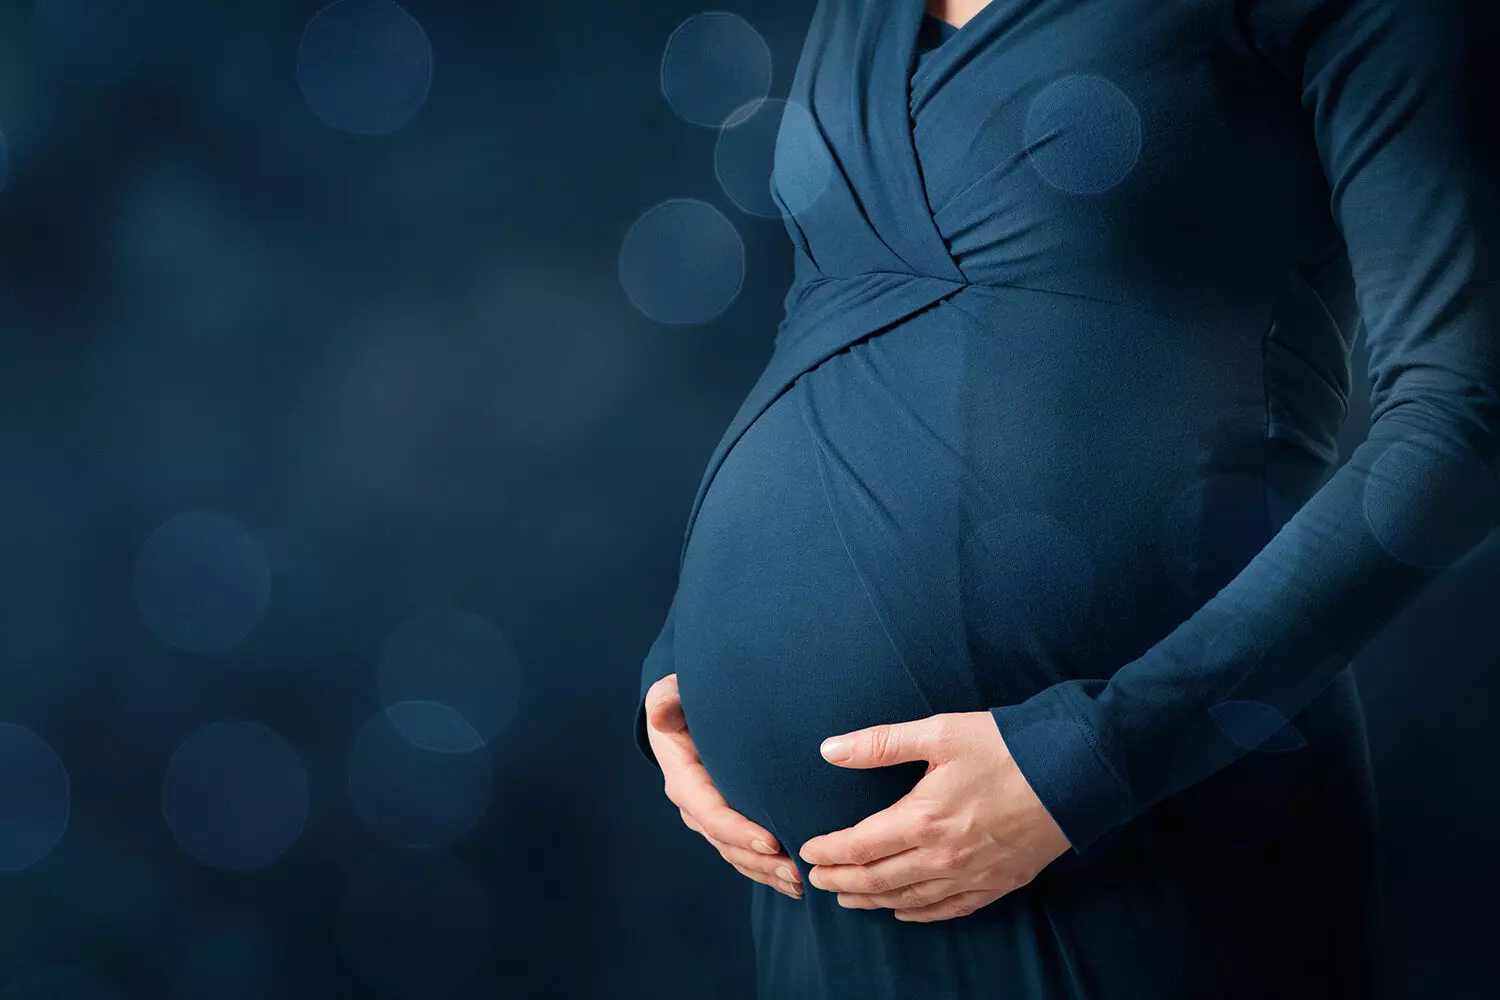 Plasma aldosterone levels favor positive pregnancy outcomes: Study